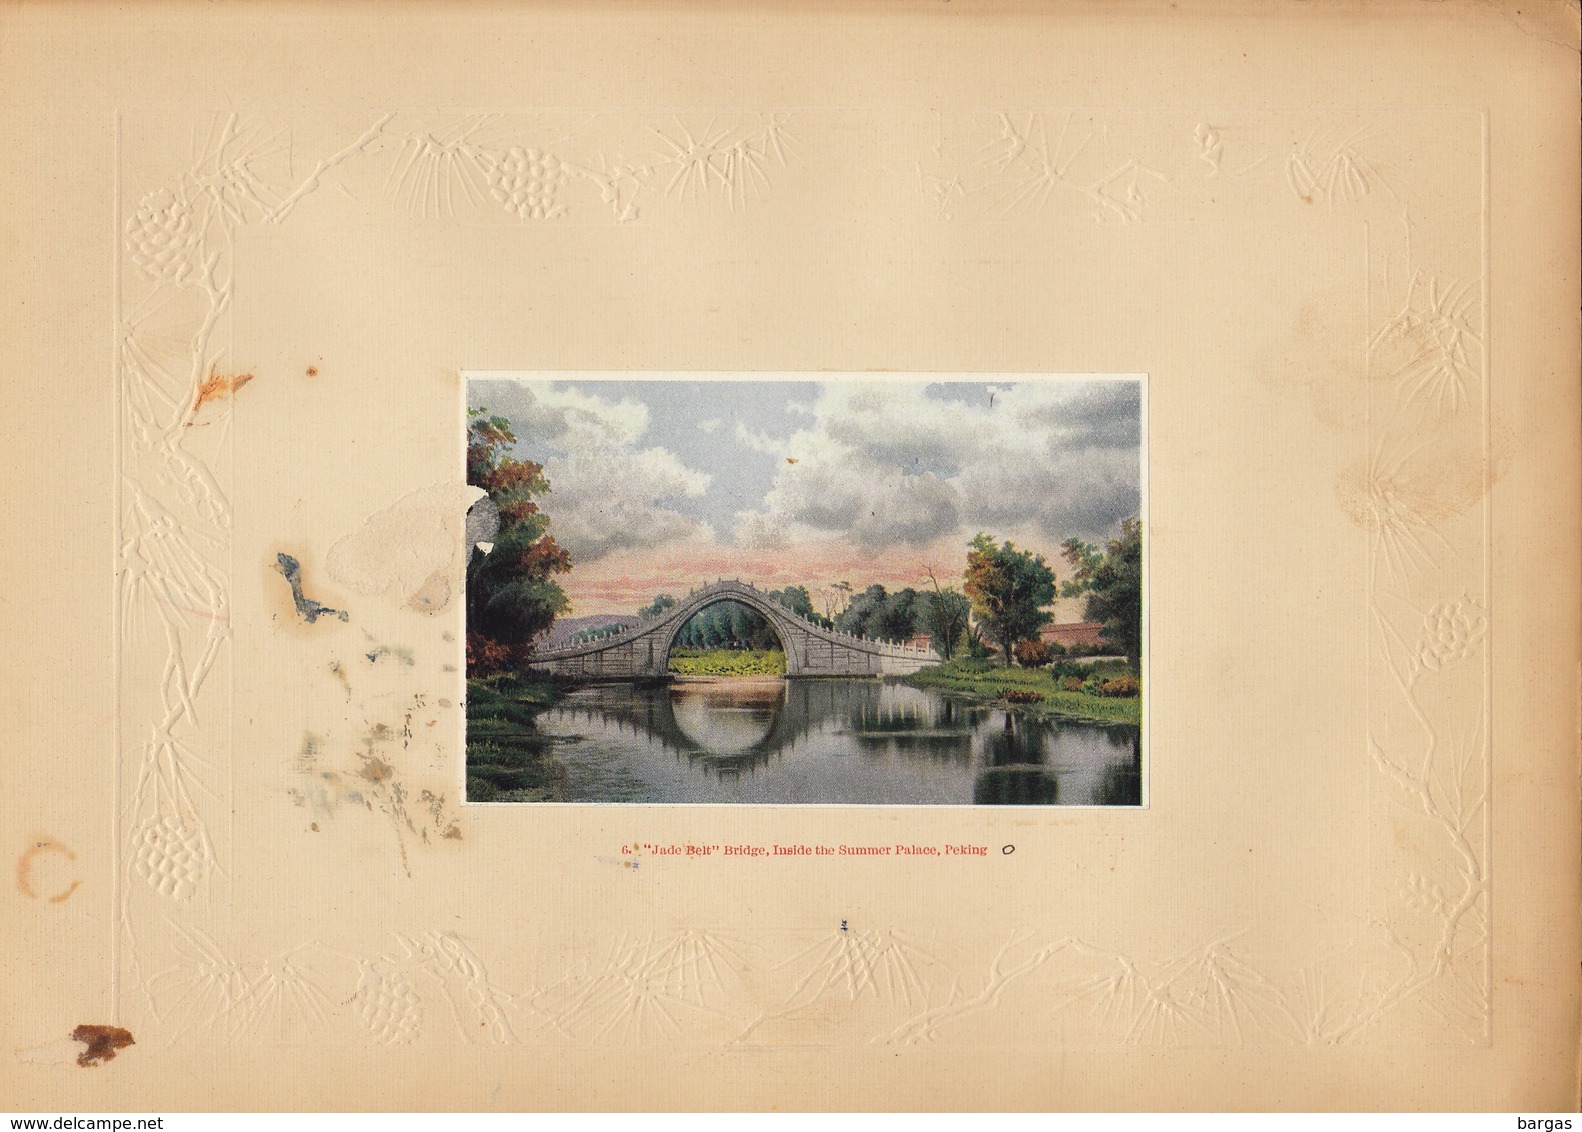 Planche Vers 1900 Lithographie Chine Jade Belt Bridge Peking China Chinois - Chinese Paper Cut